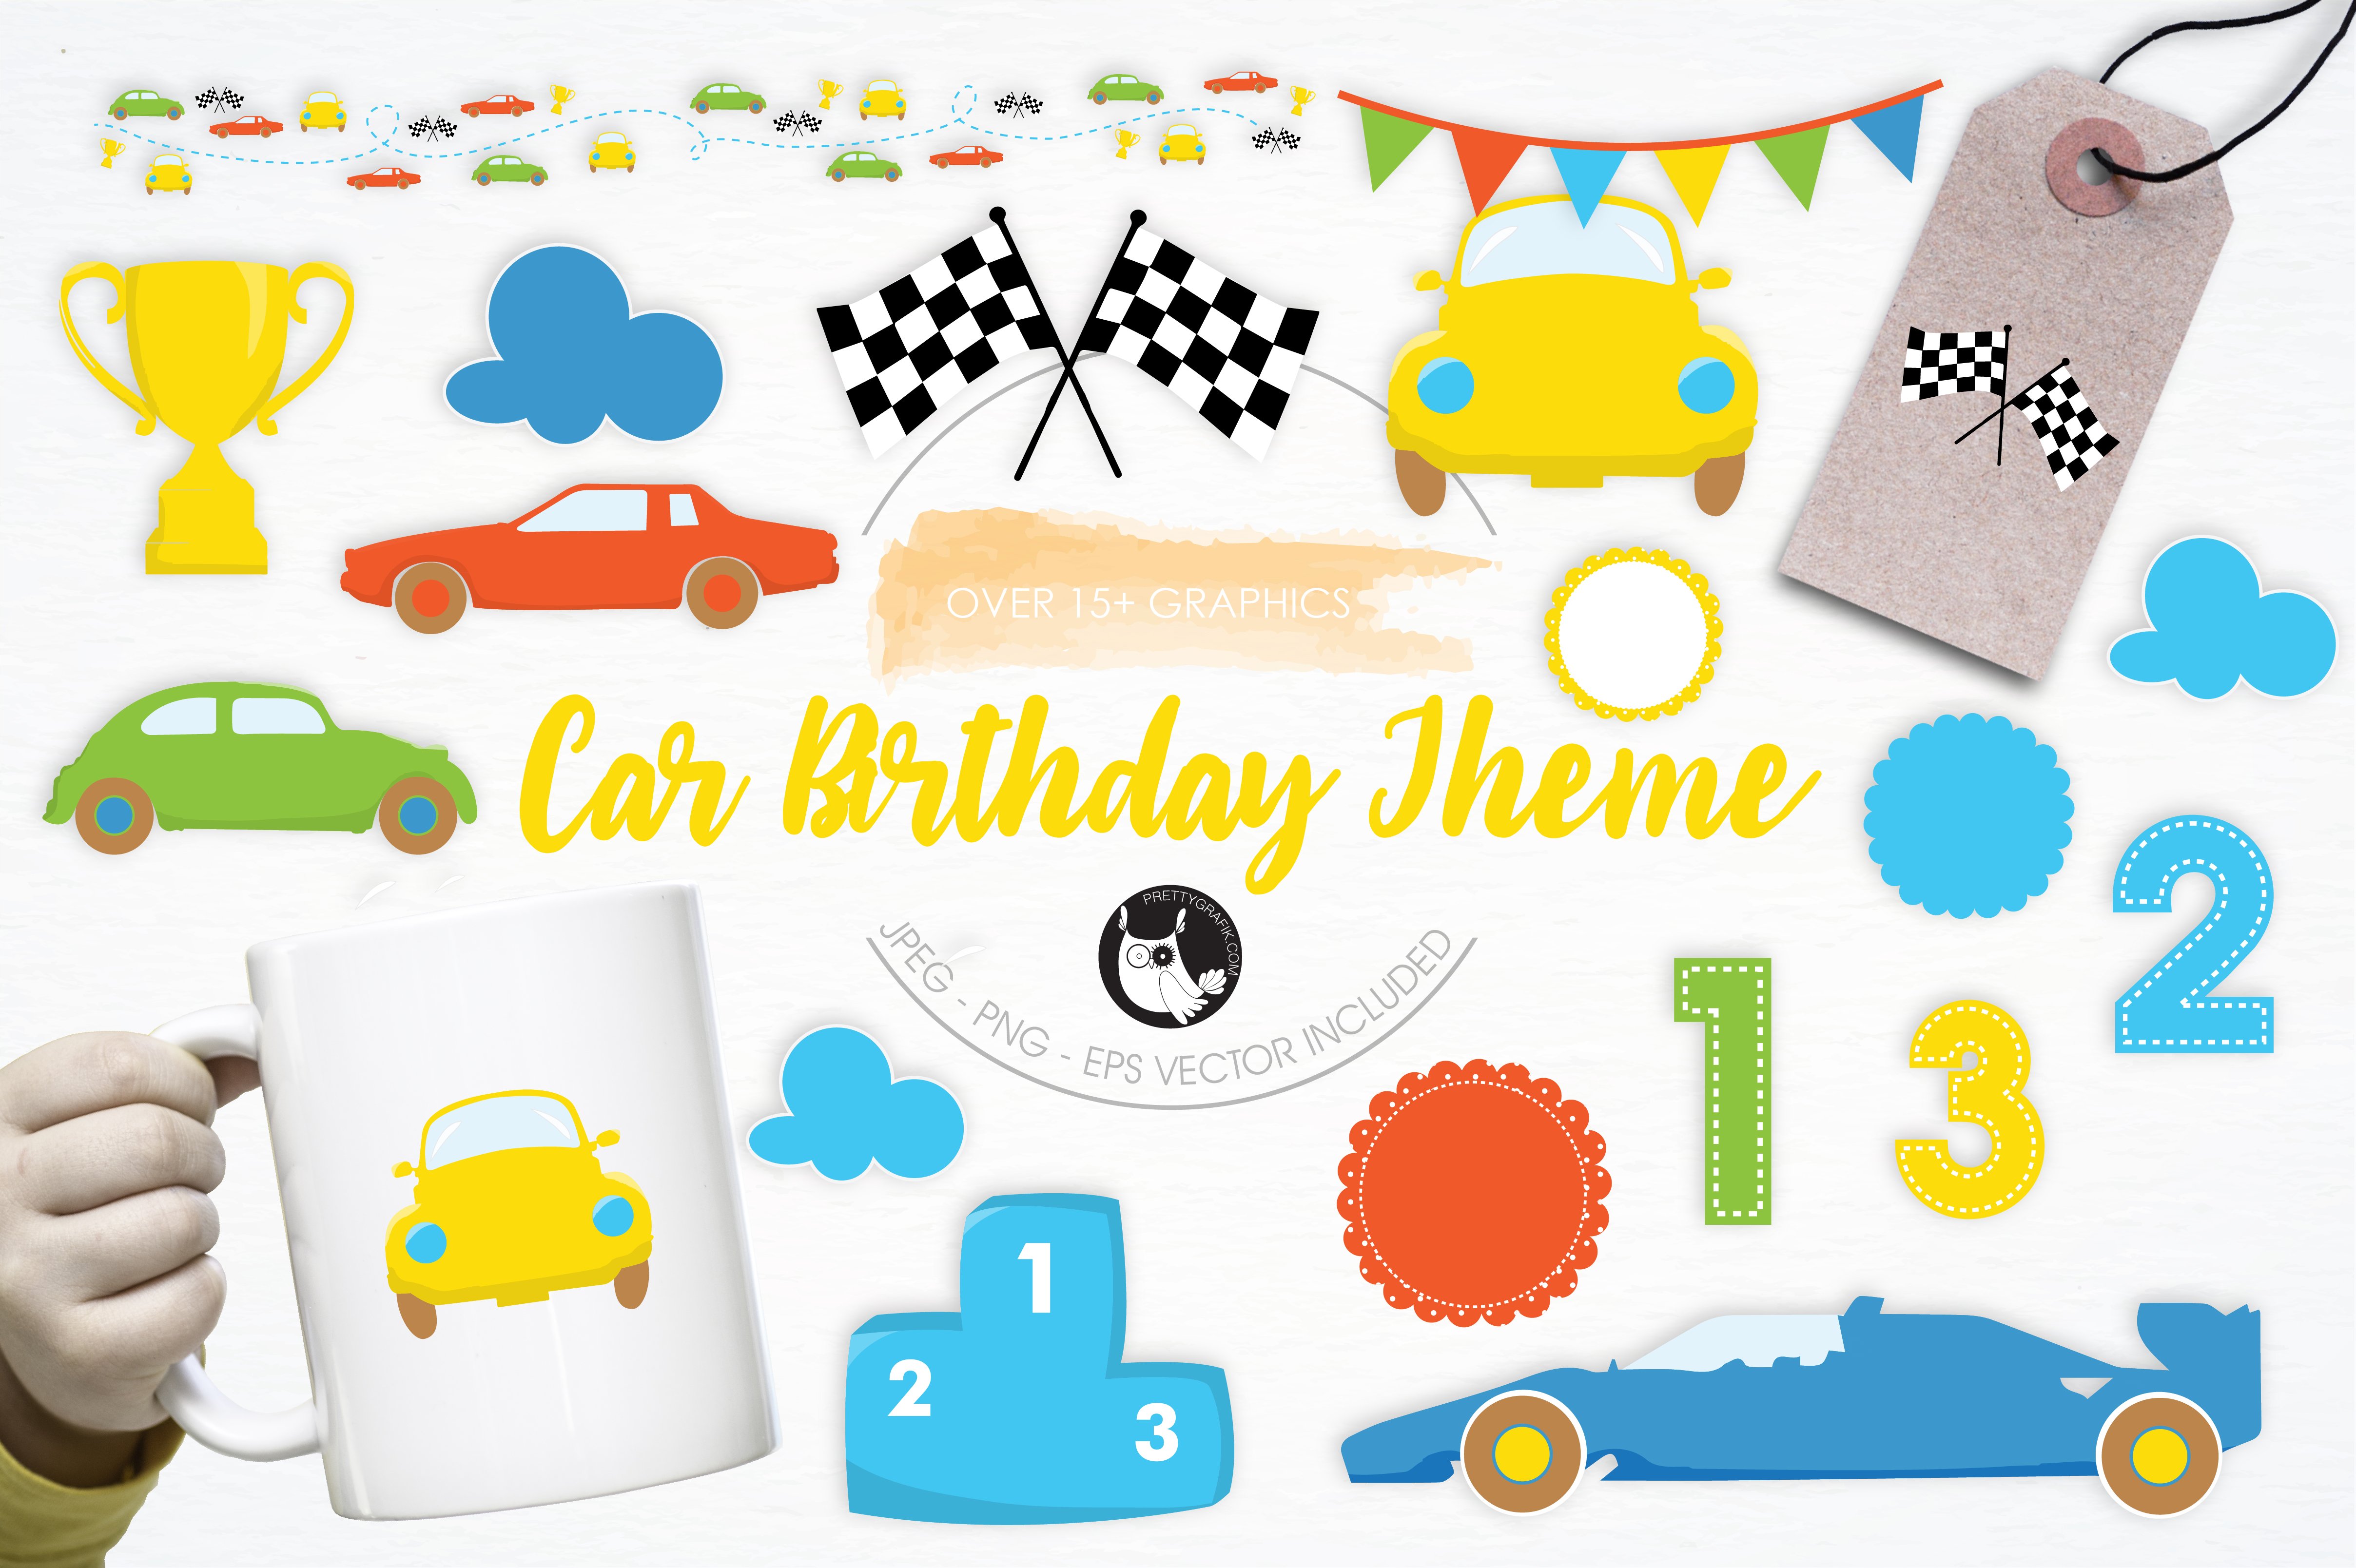 Car Birthday Theme illustration pack - Vector Image